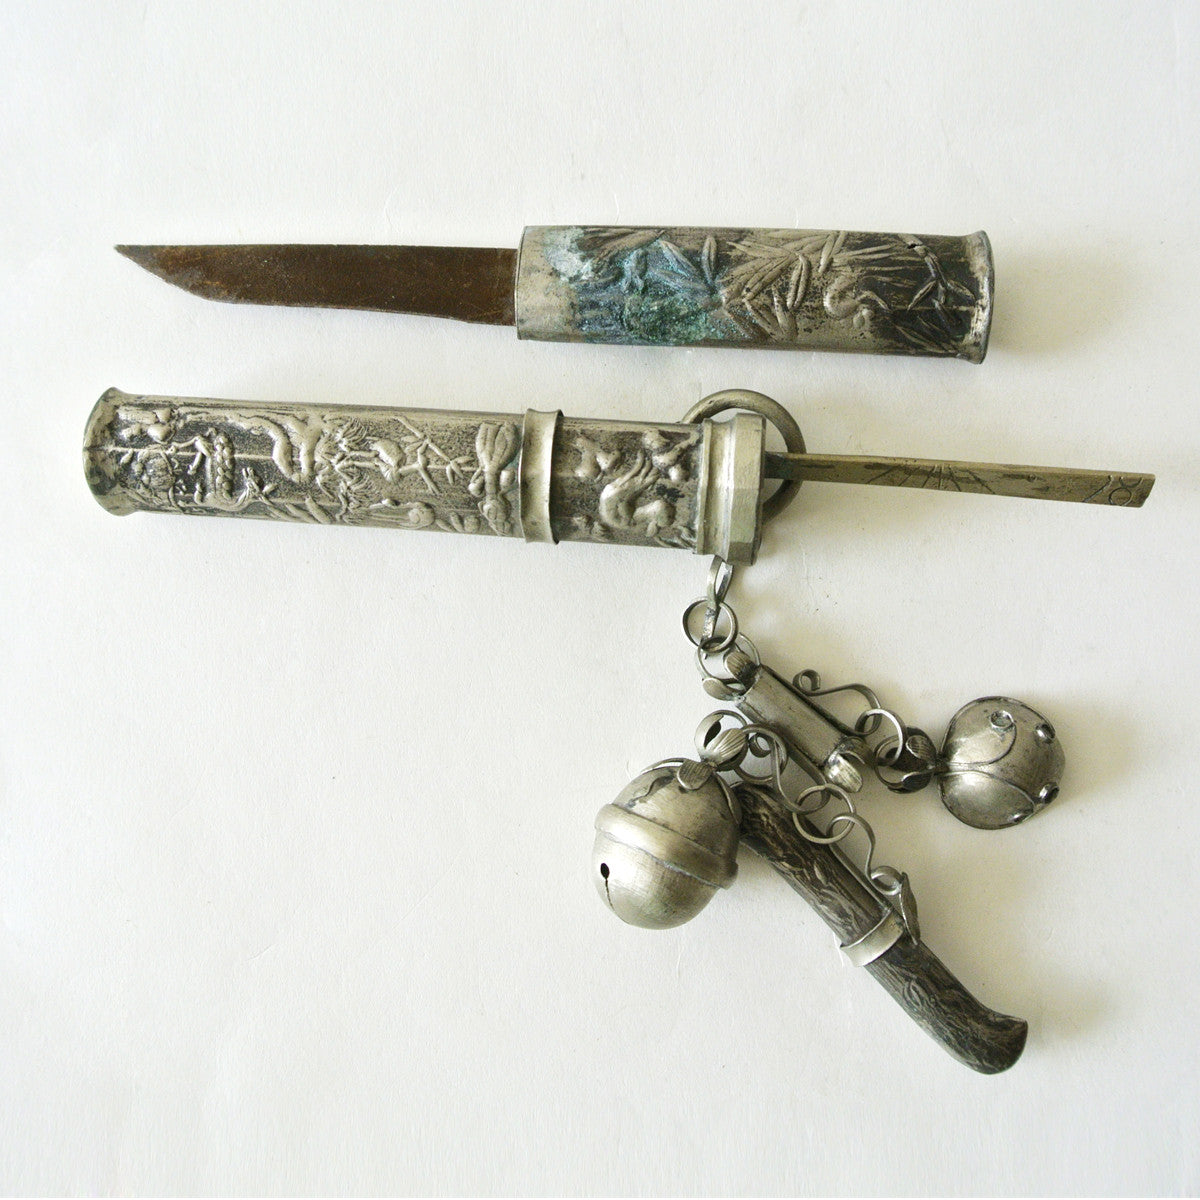 Korean "Eunjangdo" Dagger with Floral Carving and Three Pendants